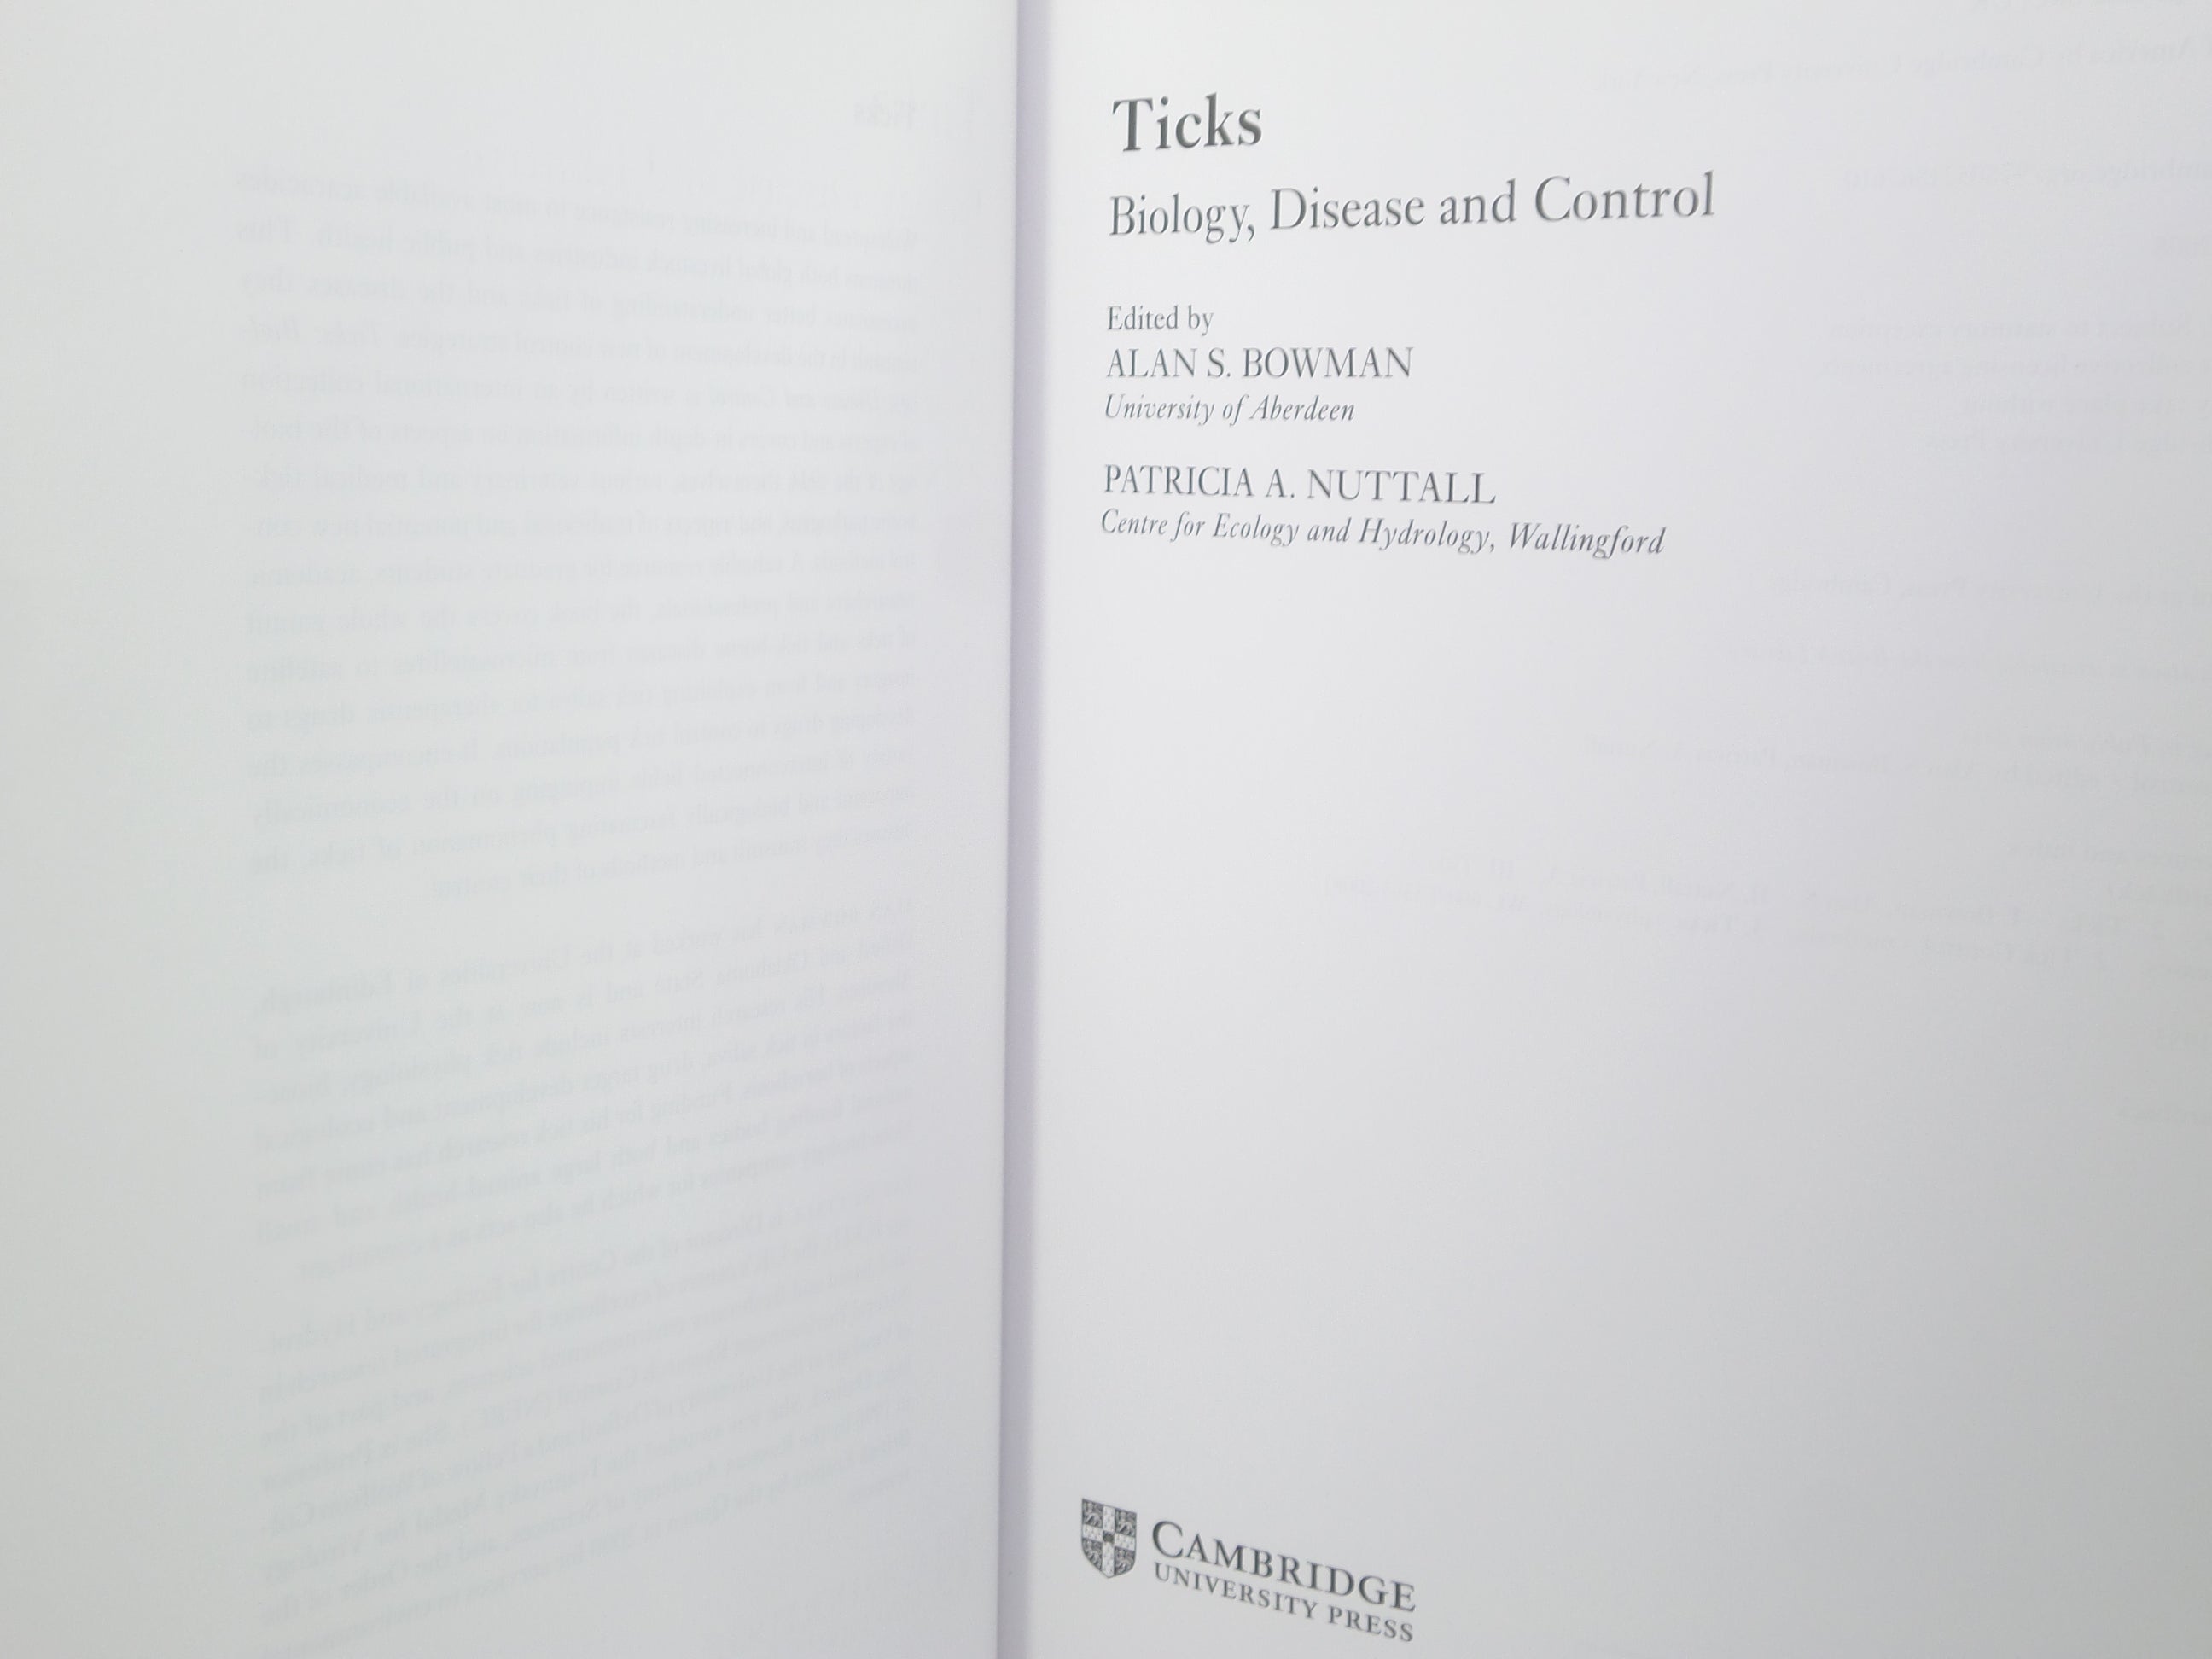 TICKS: BIOLOGY, DISEASE AND CONTROL EDITED BY ALAN BOWMAN 2008 HARDBACK